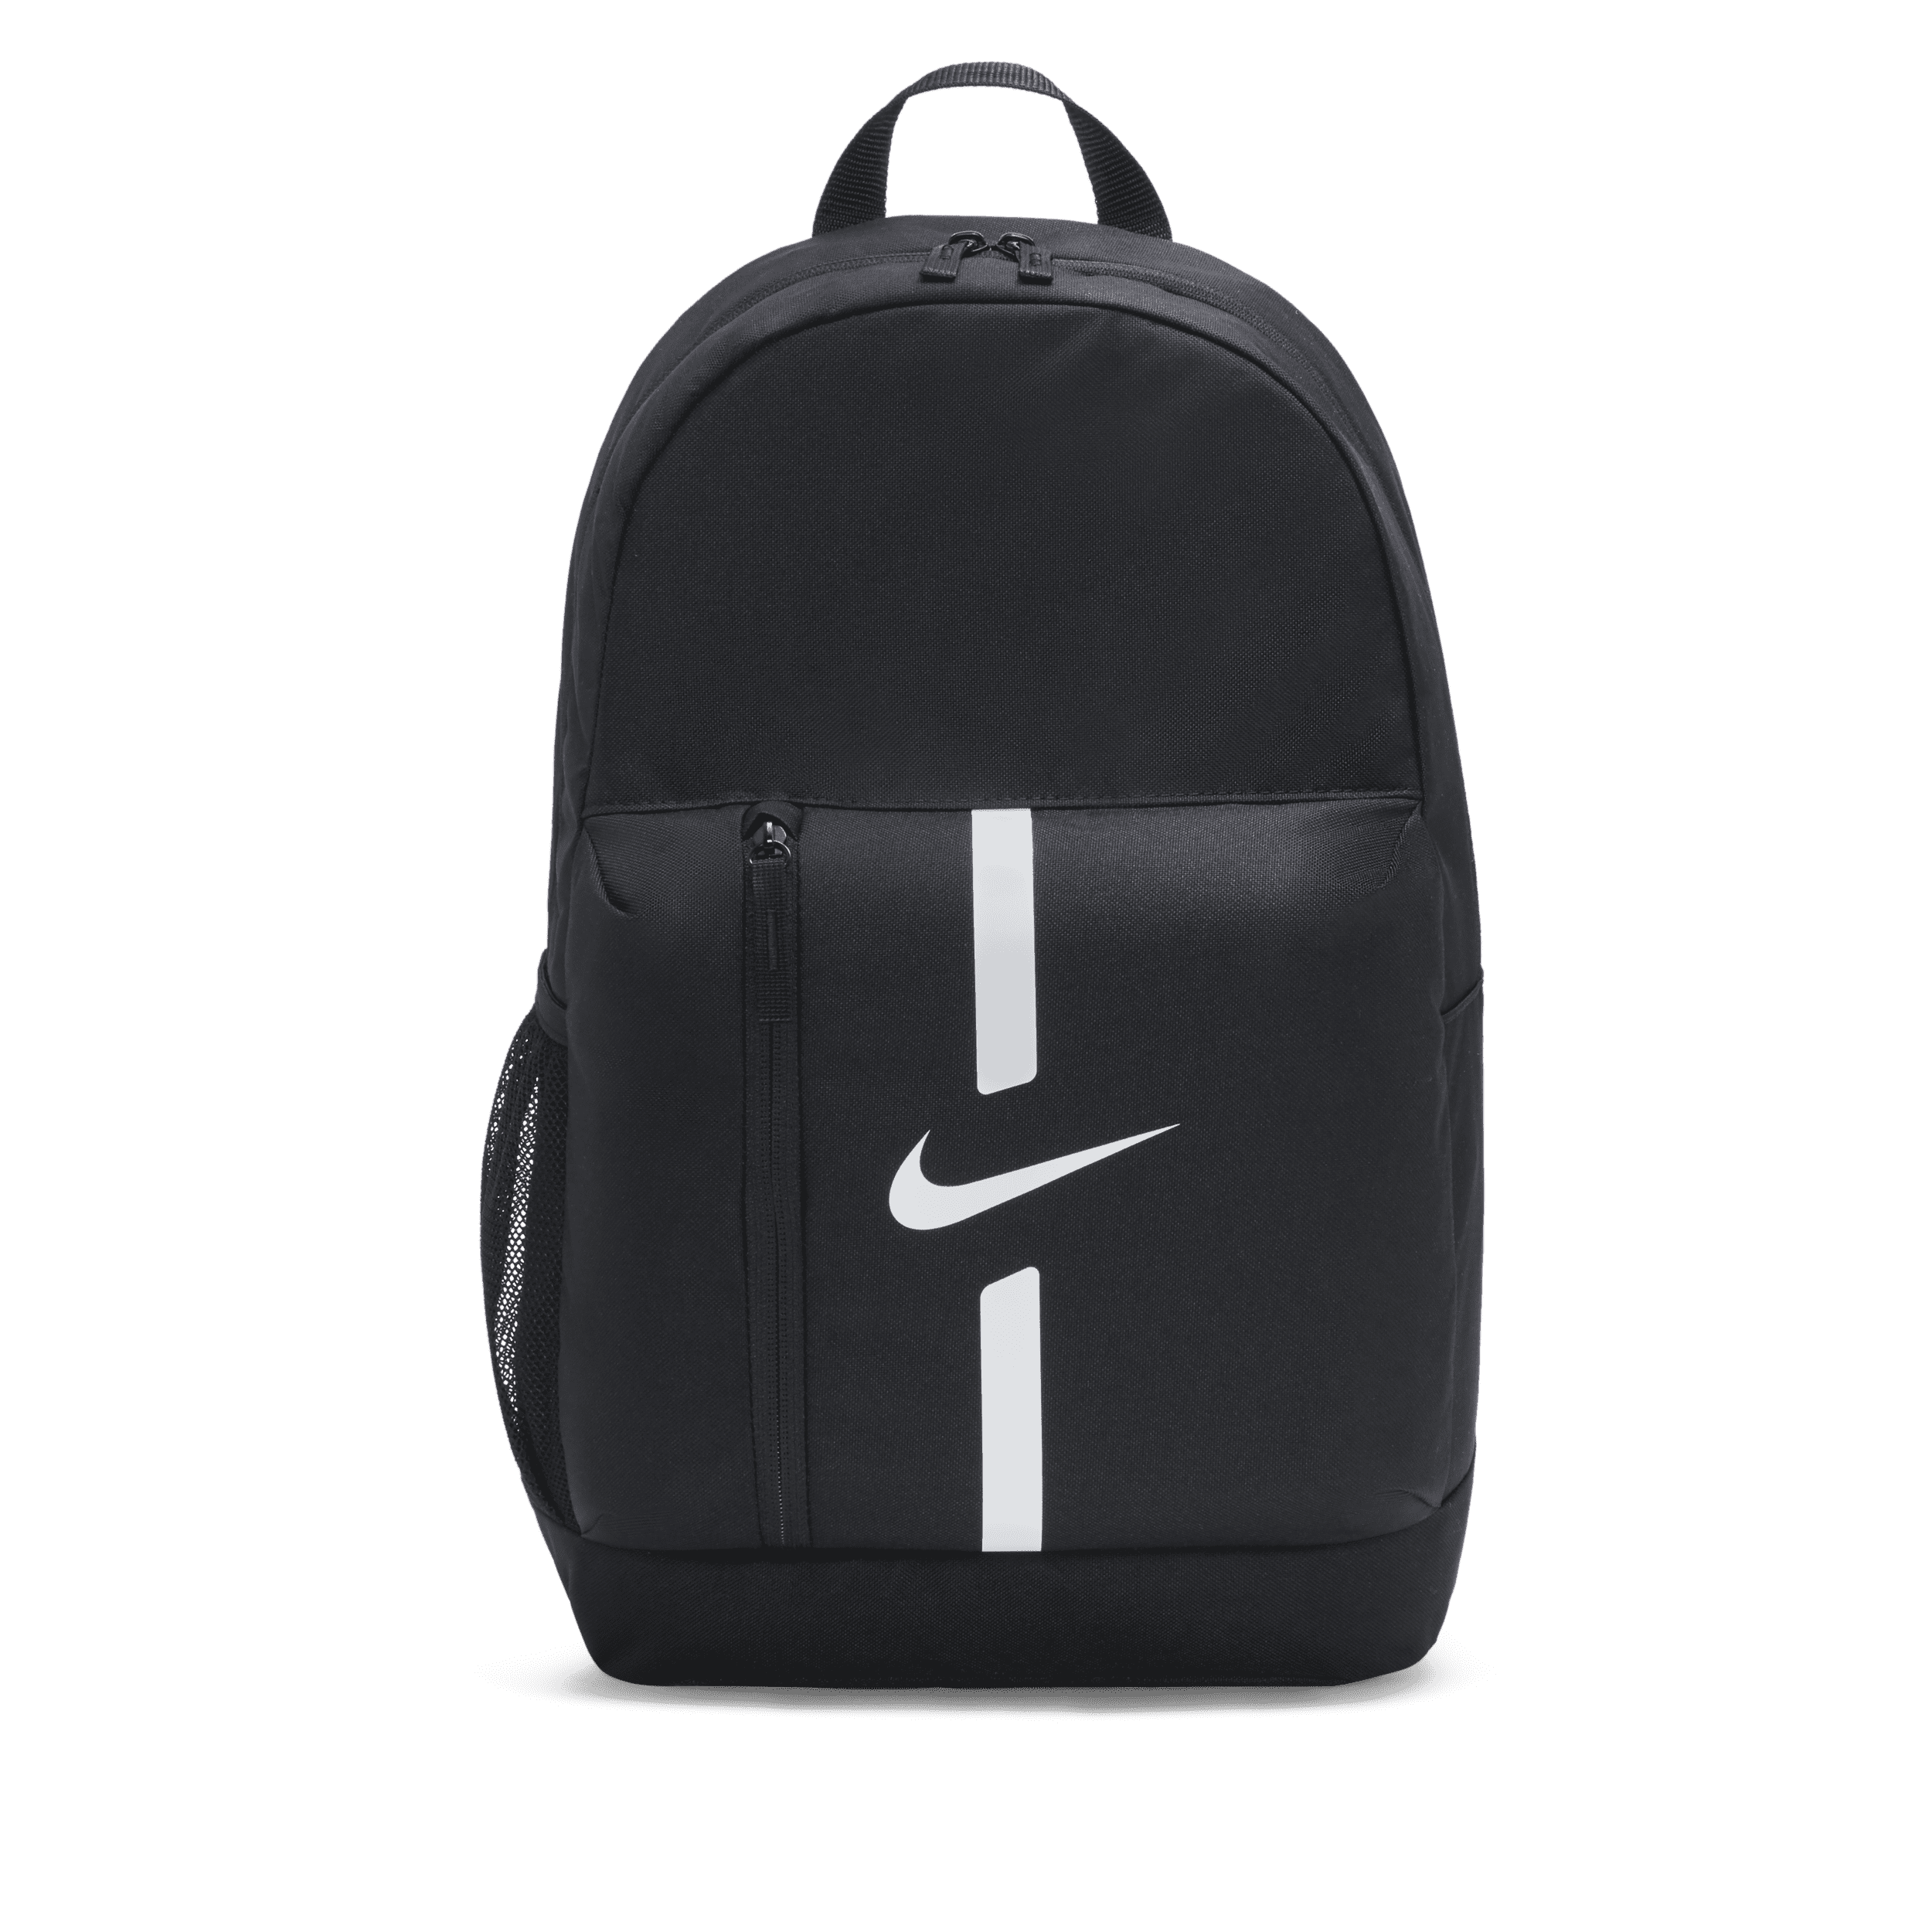 Zaino da calcio Nike Academy Team (22 L) – Bambini - Nero